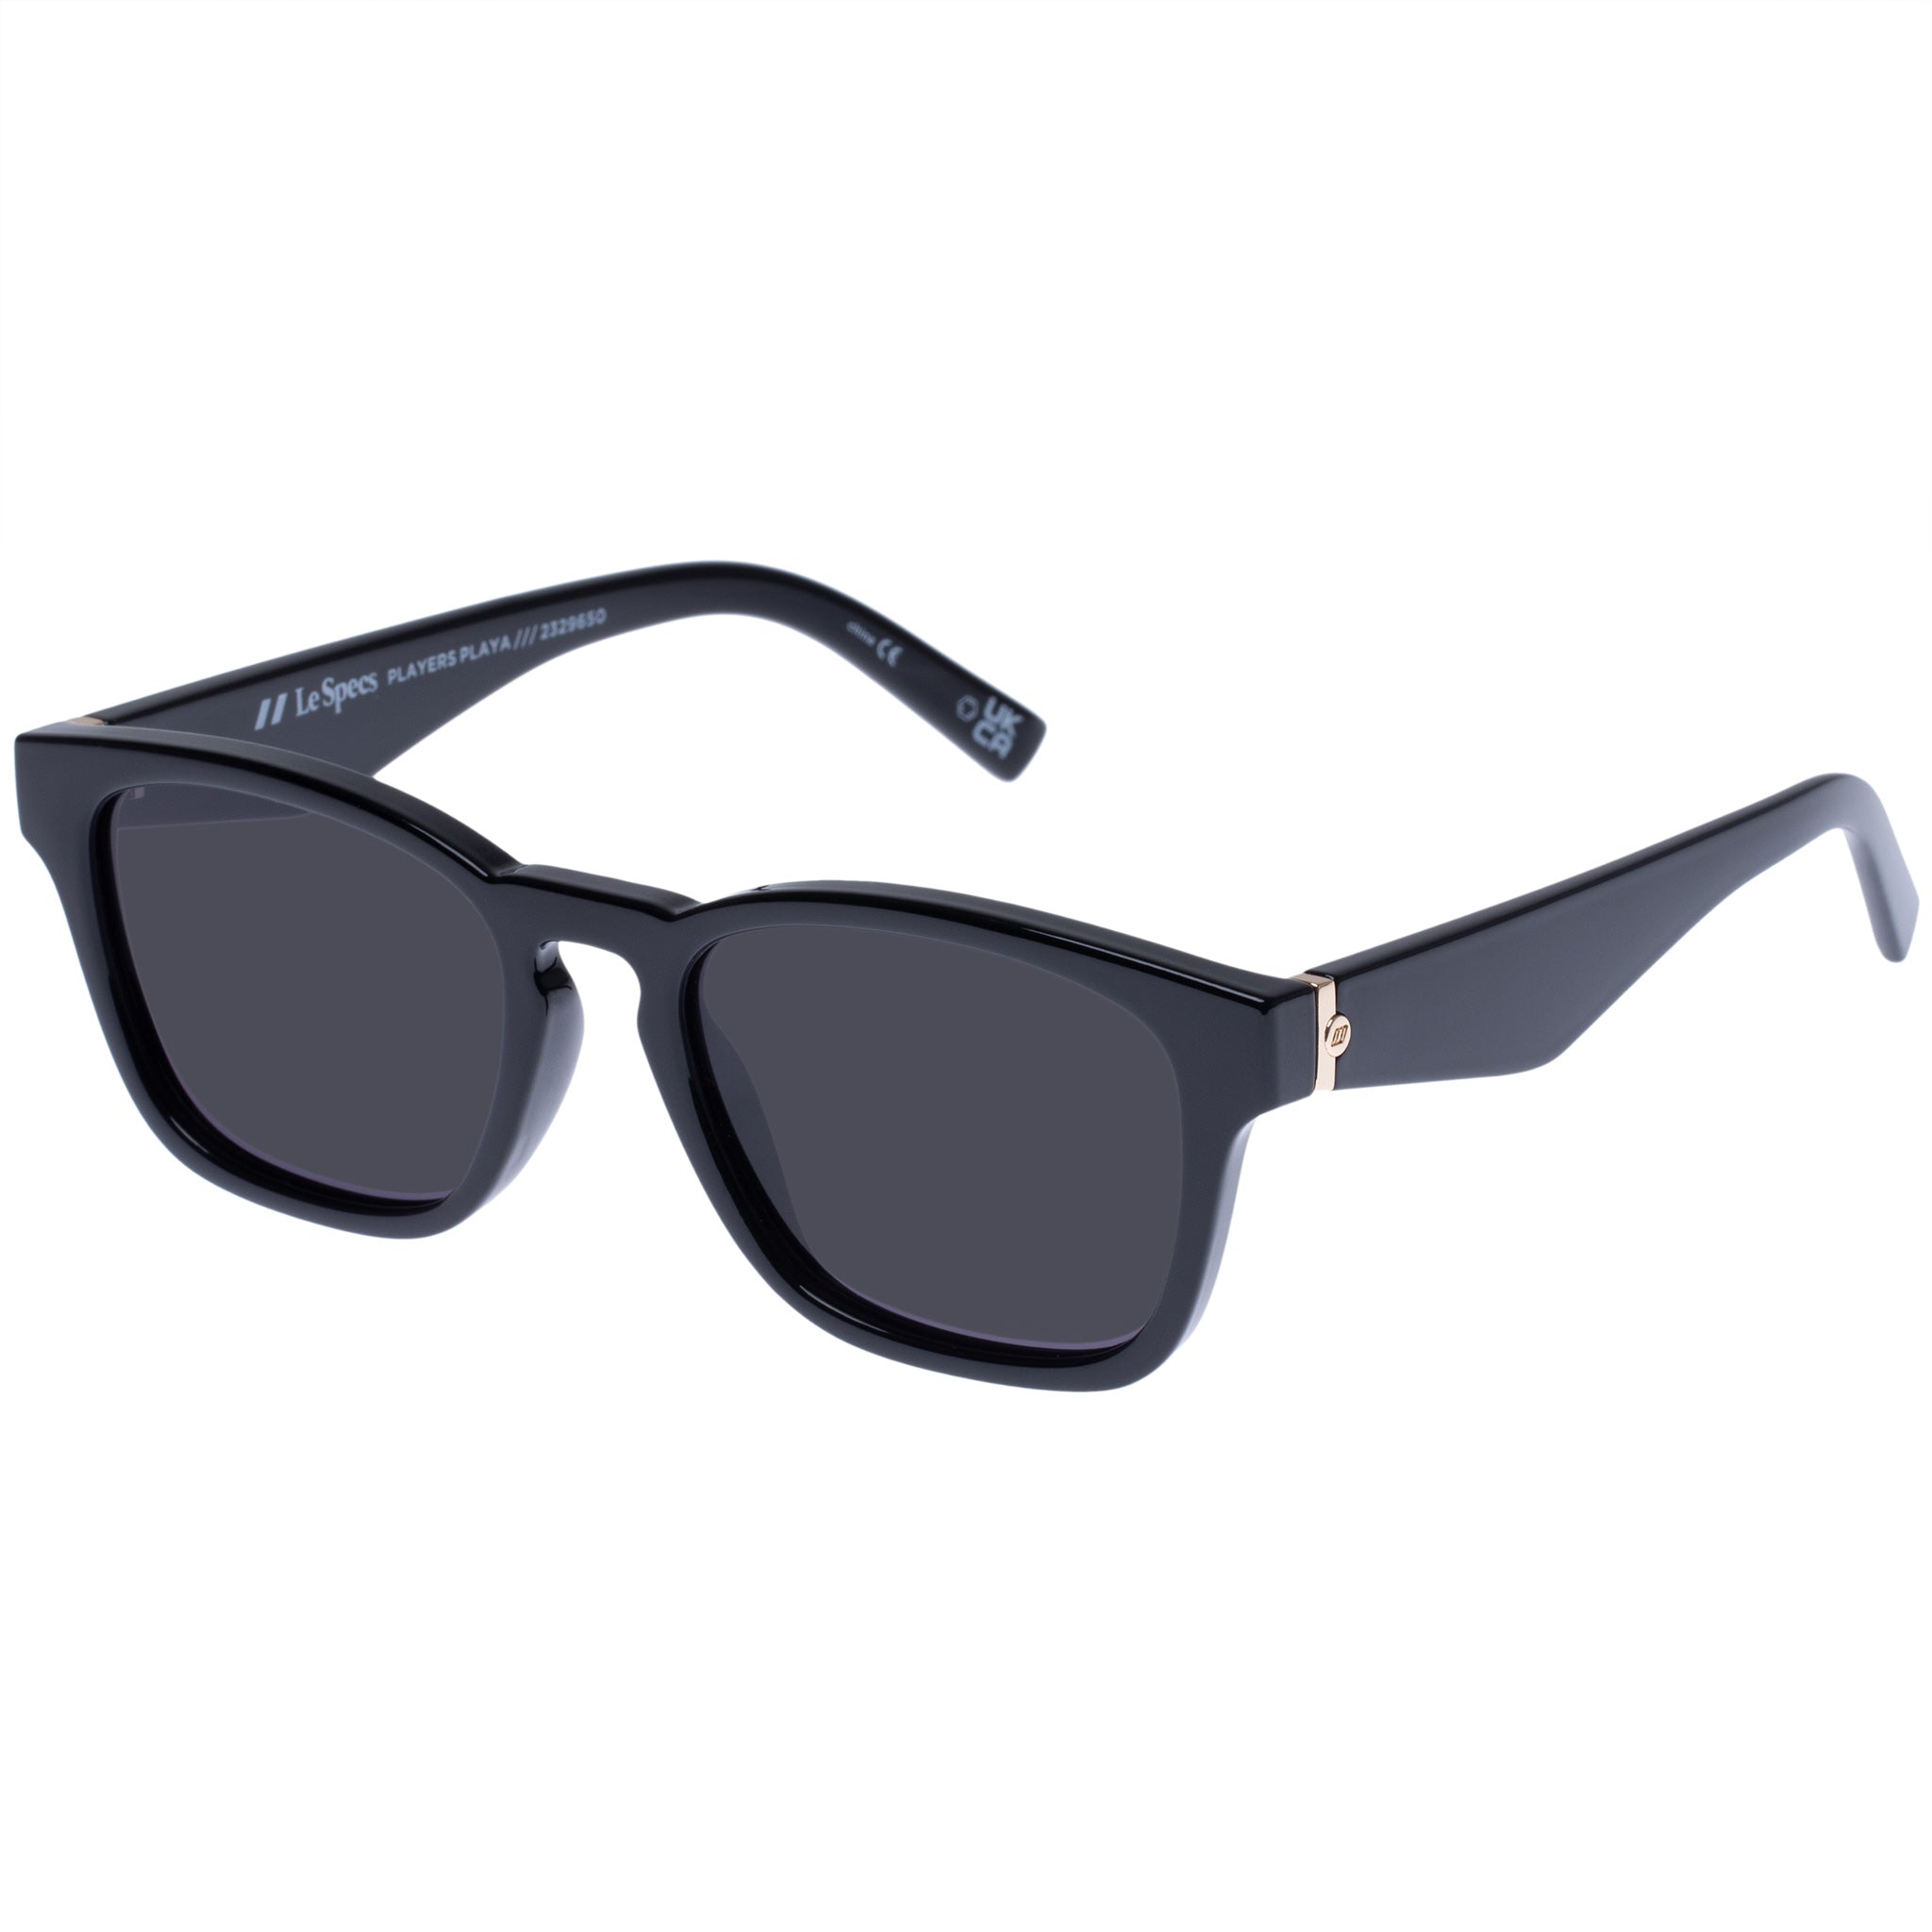 Le Specs Sunglasses Players Playa - Black